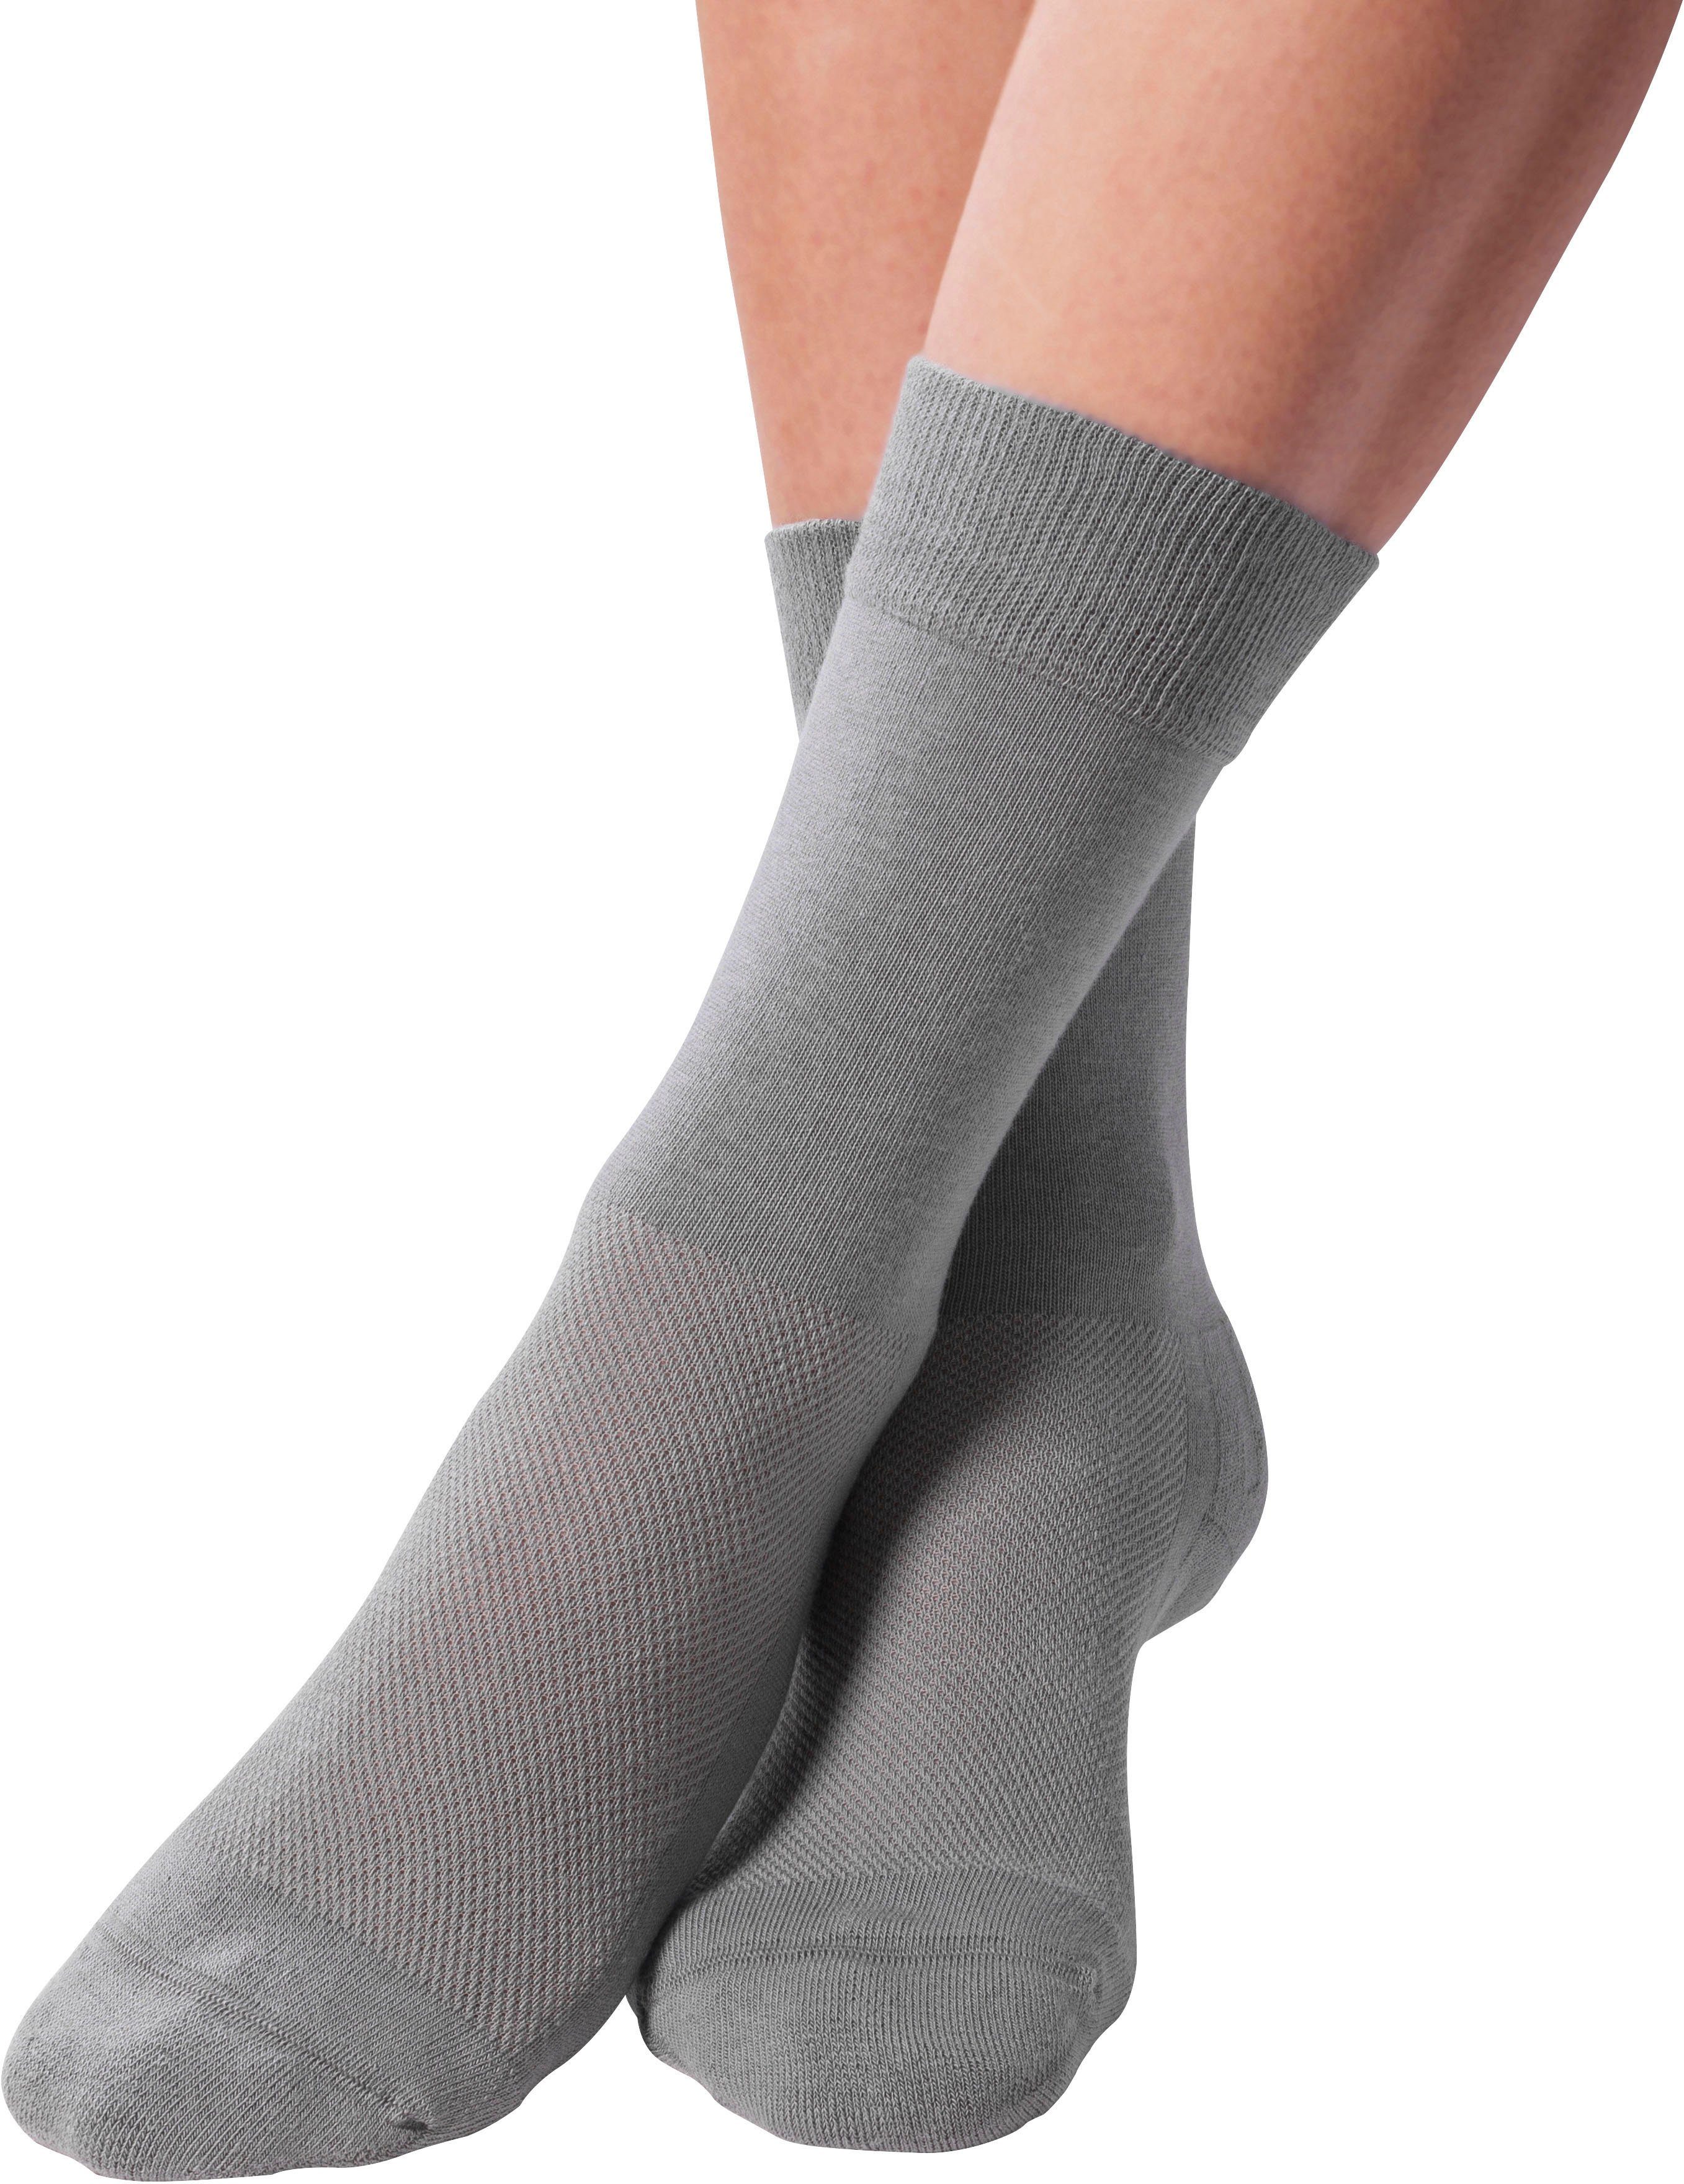 Fußgut Diabetikersocken Venenfeund Sensitiv Socken (2-Paar) grau